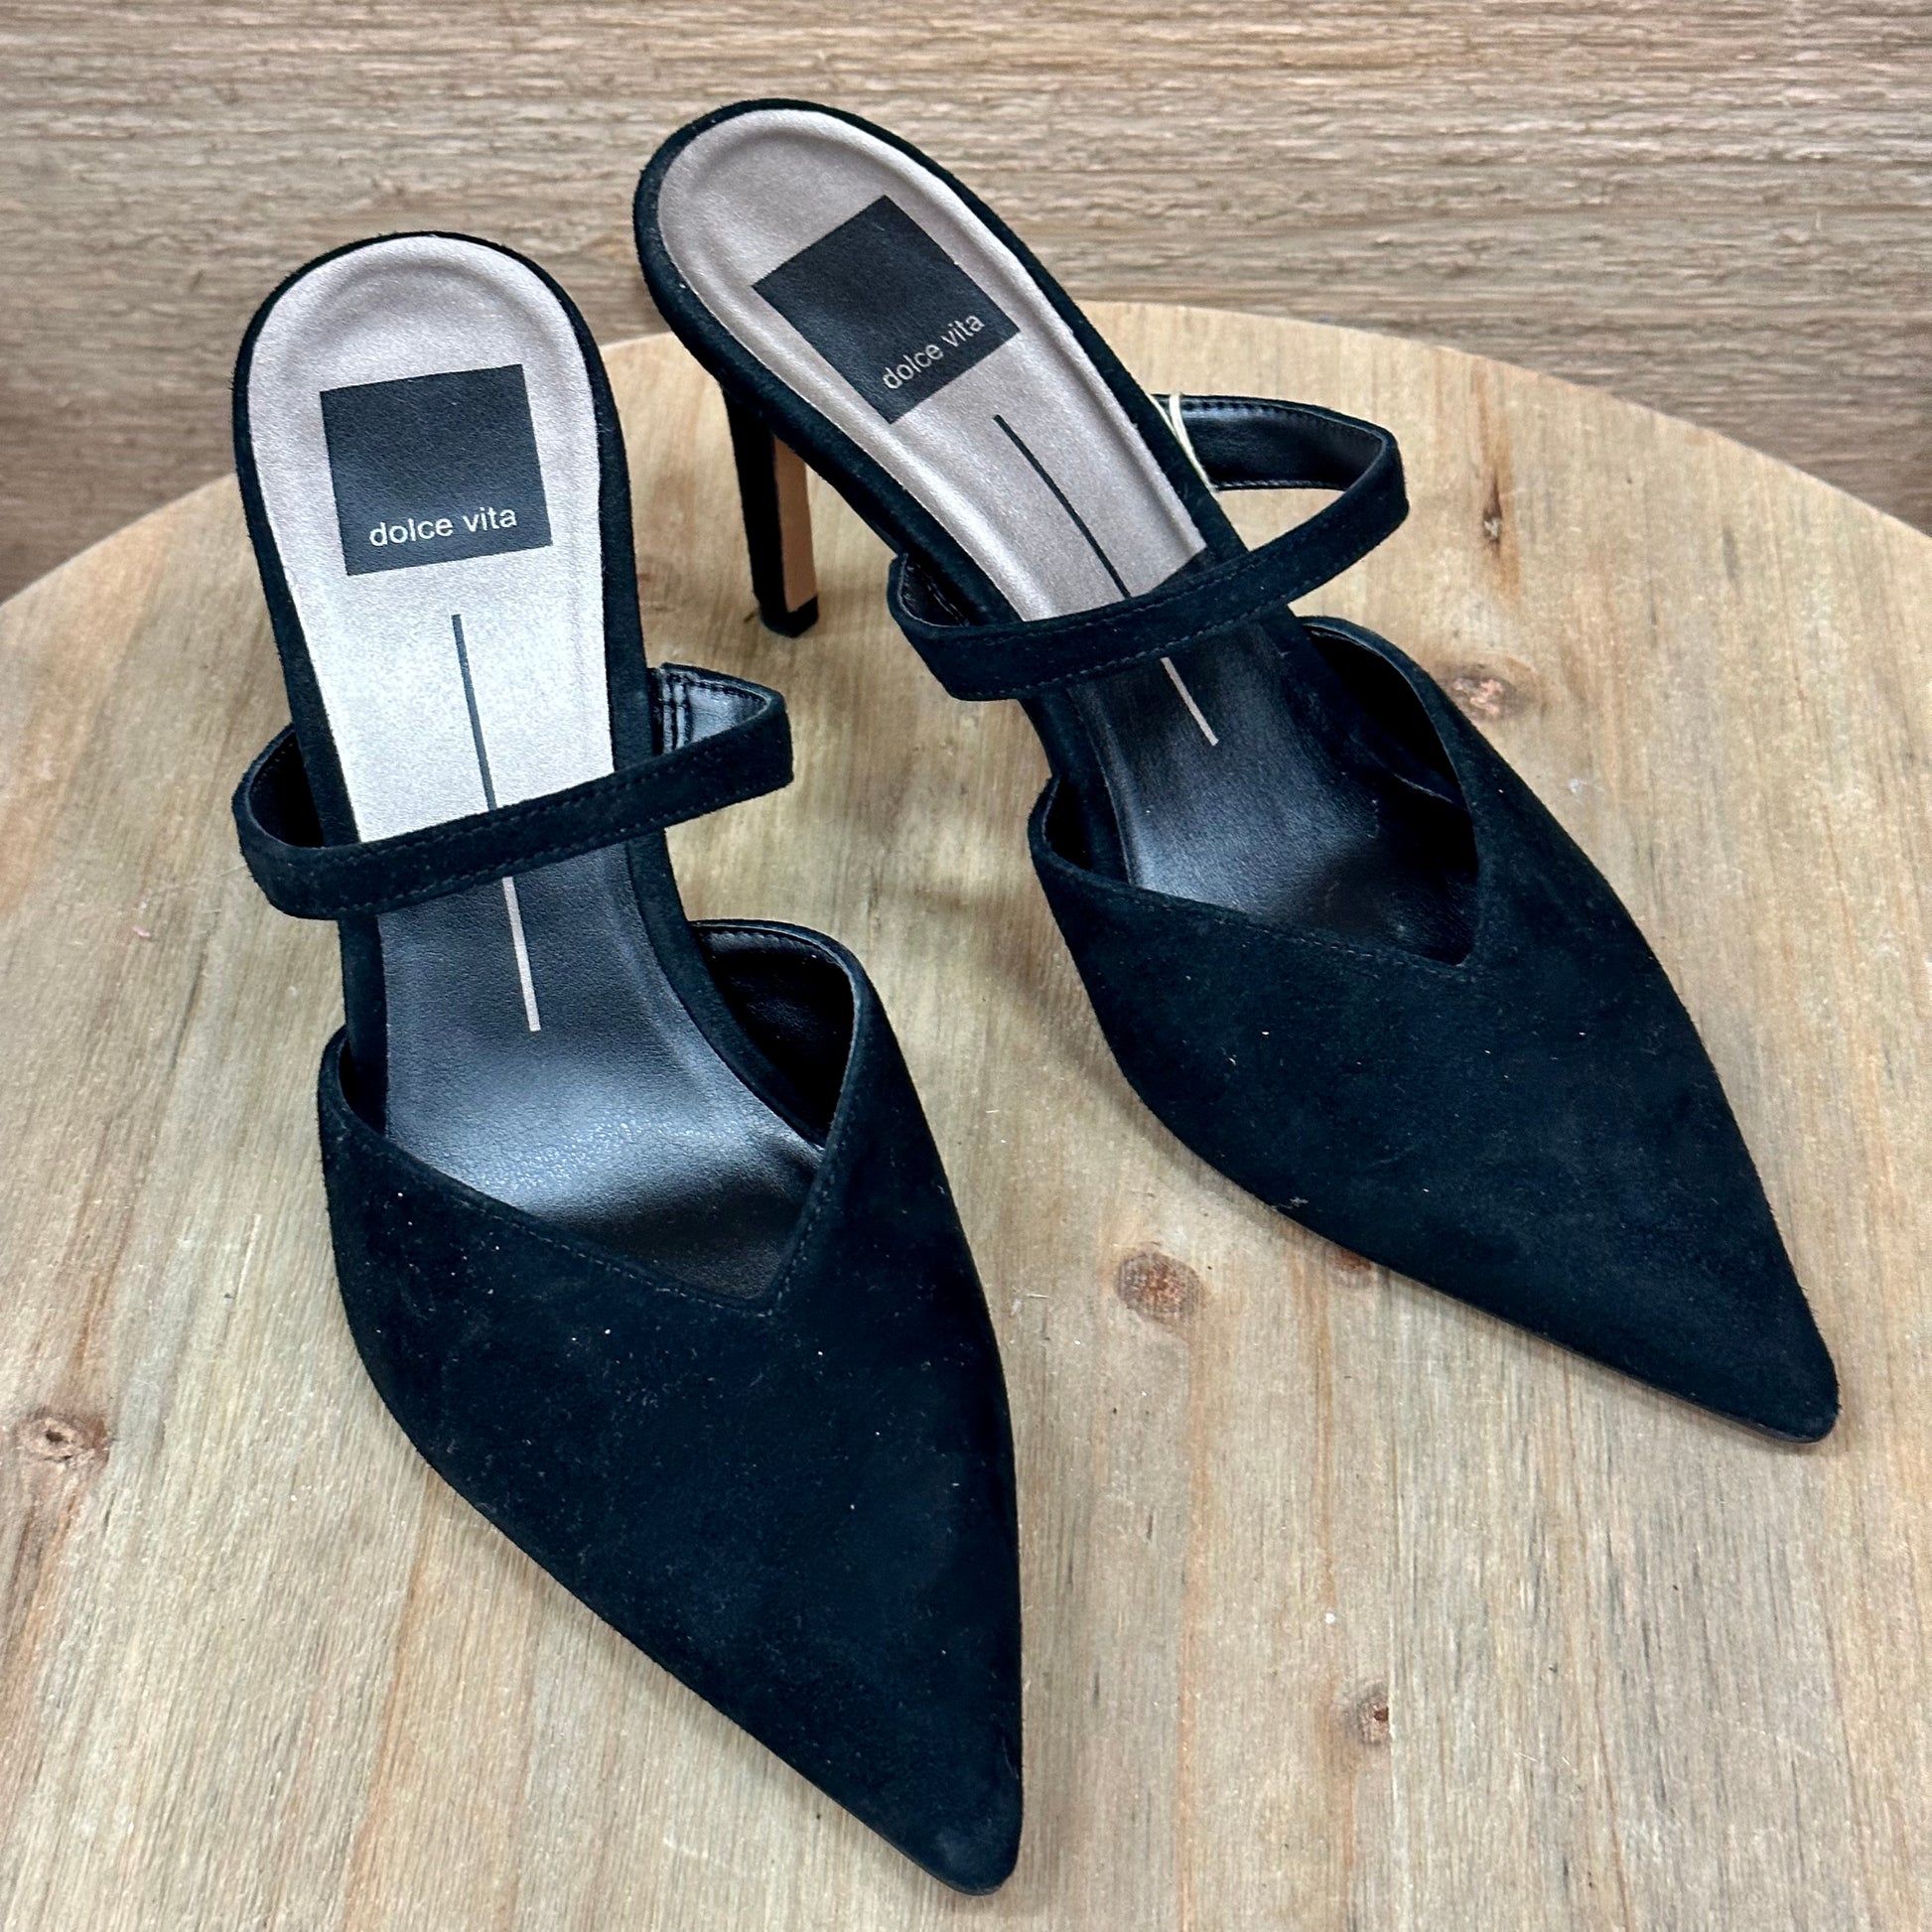 black heels, black formal heel, formal shoes, dressy heels, event shoe, suede heels, black suede heel, dolce vita, dolce vita heel, dolce vita black heels, dolce vita black suede heels